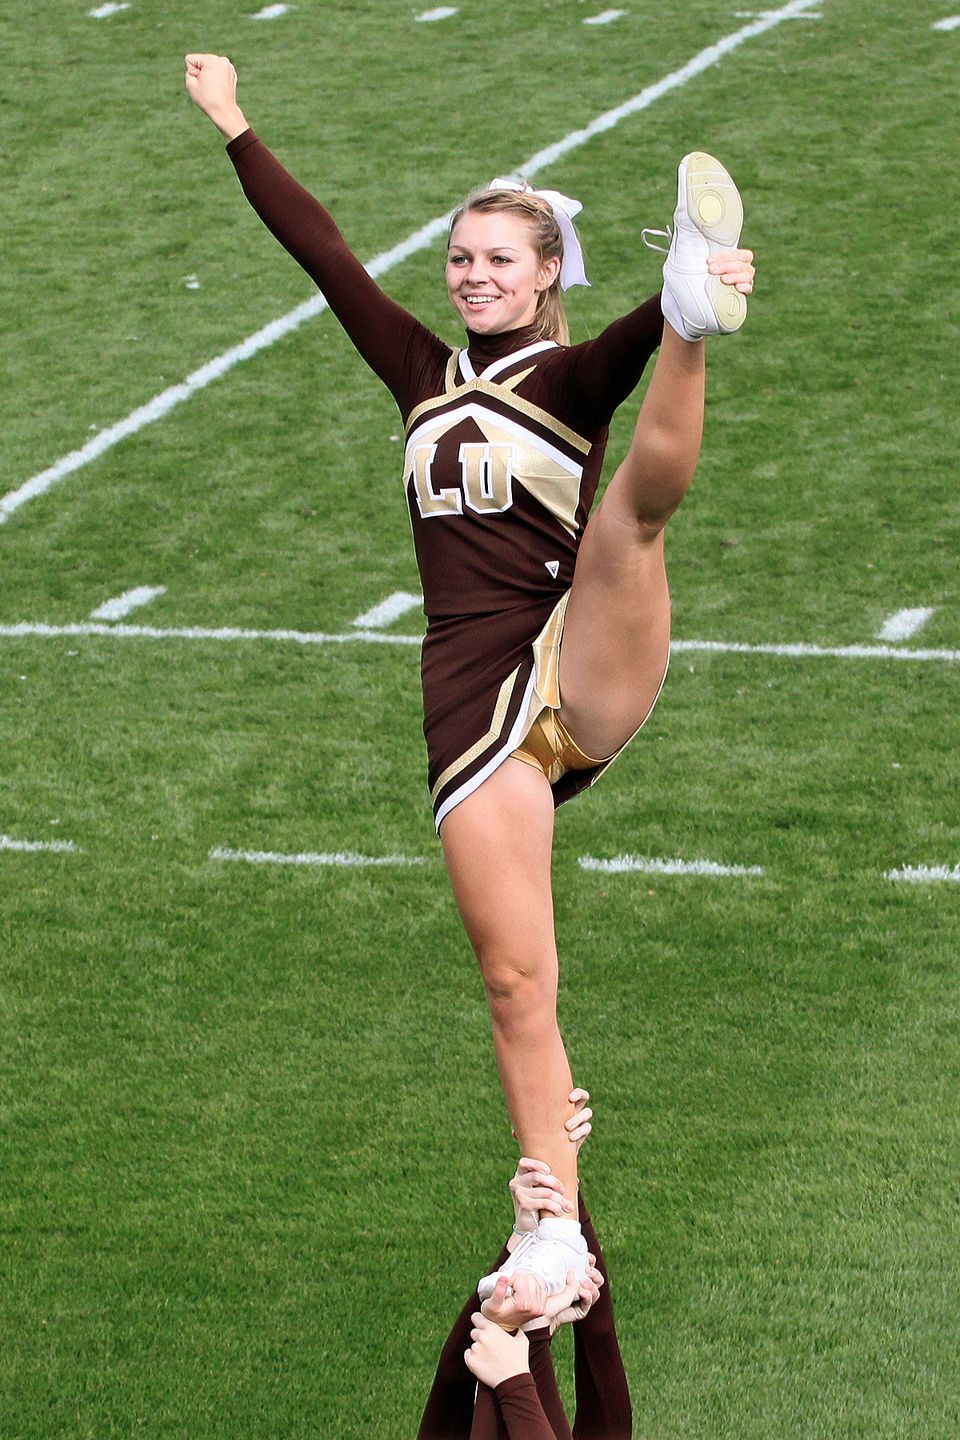 Teen cheerleader upskirt pics. 